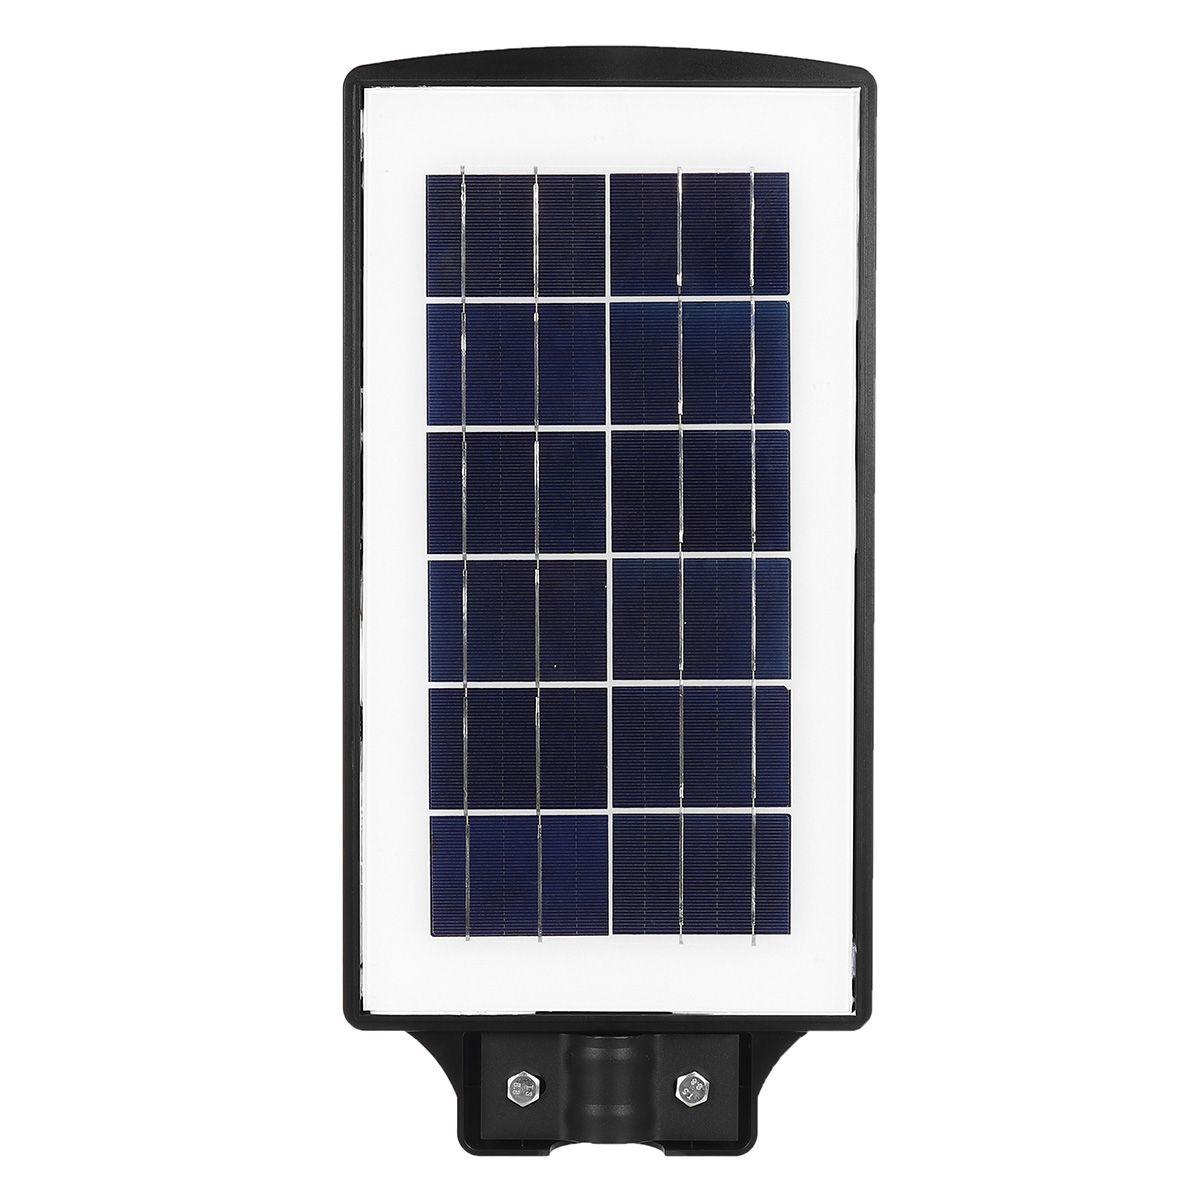 140160324392LED-Solar-Powered-LED-Street-Light-PIR-Motion-Sensor-Wall-Lamp--Remote-1719785